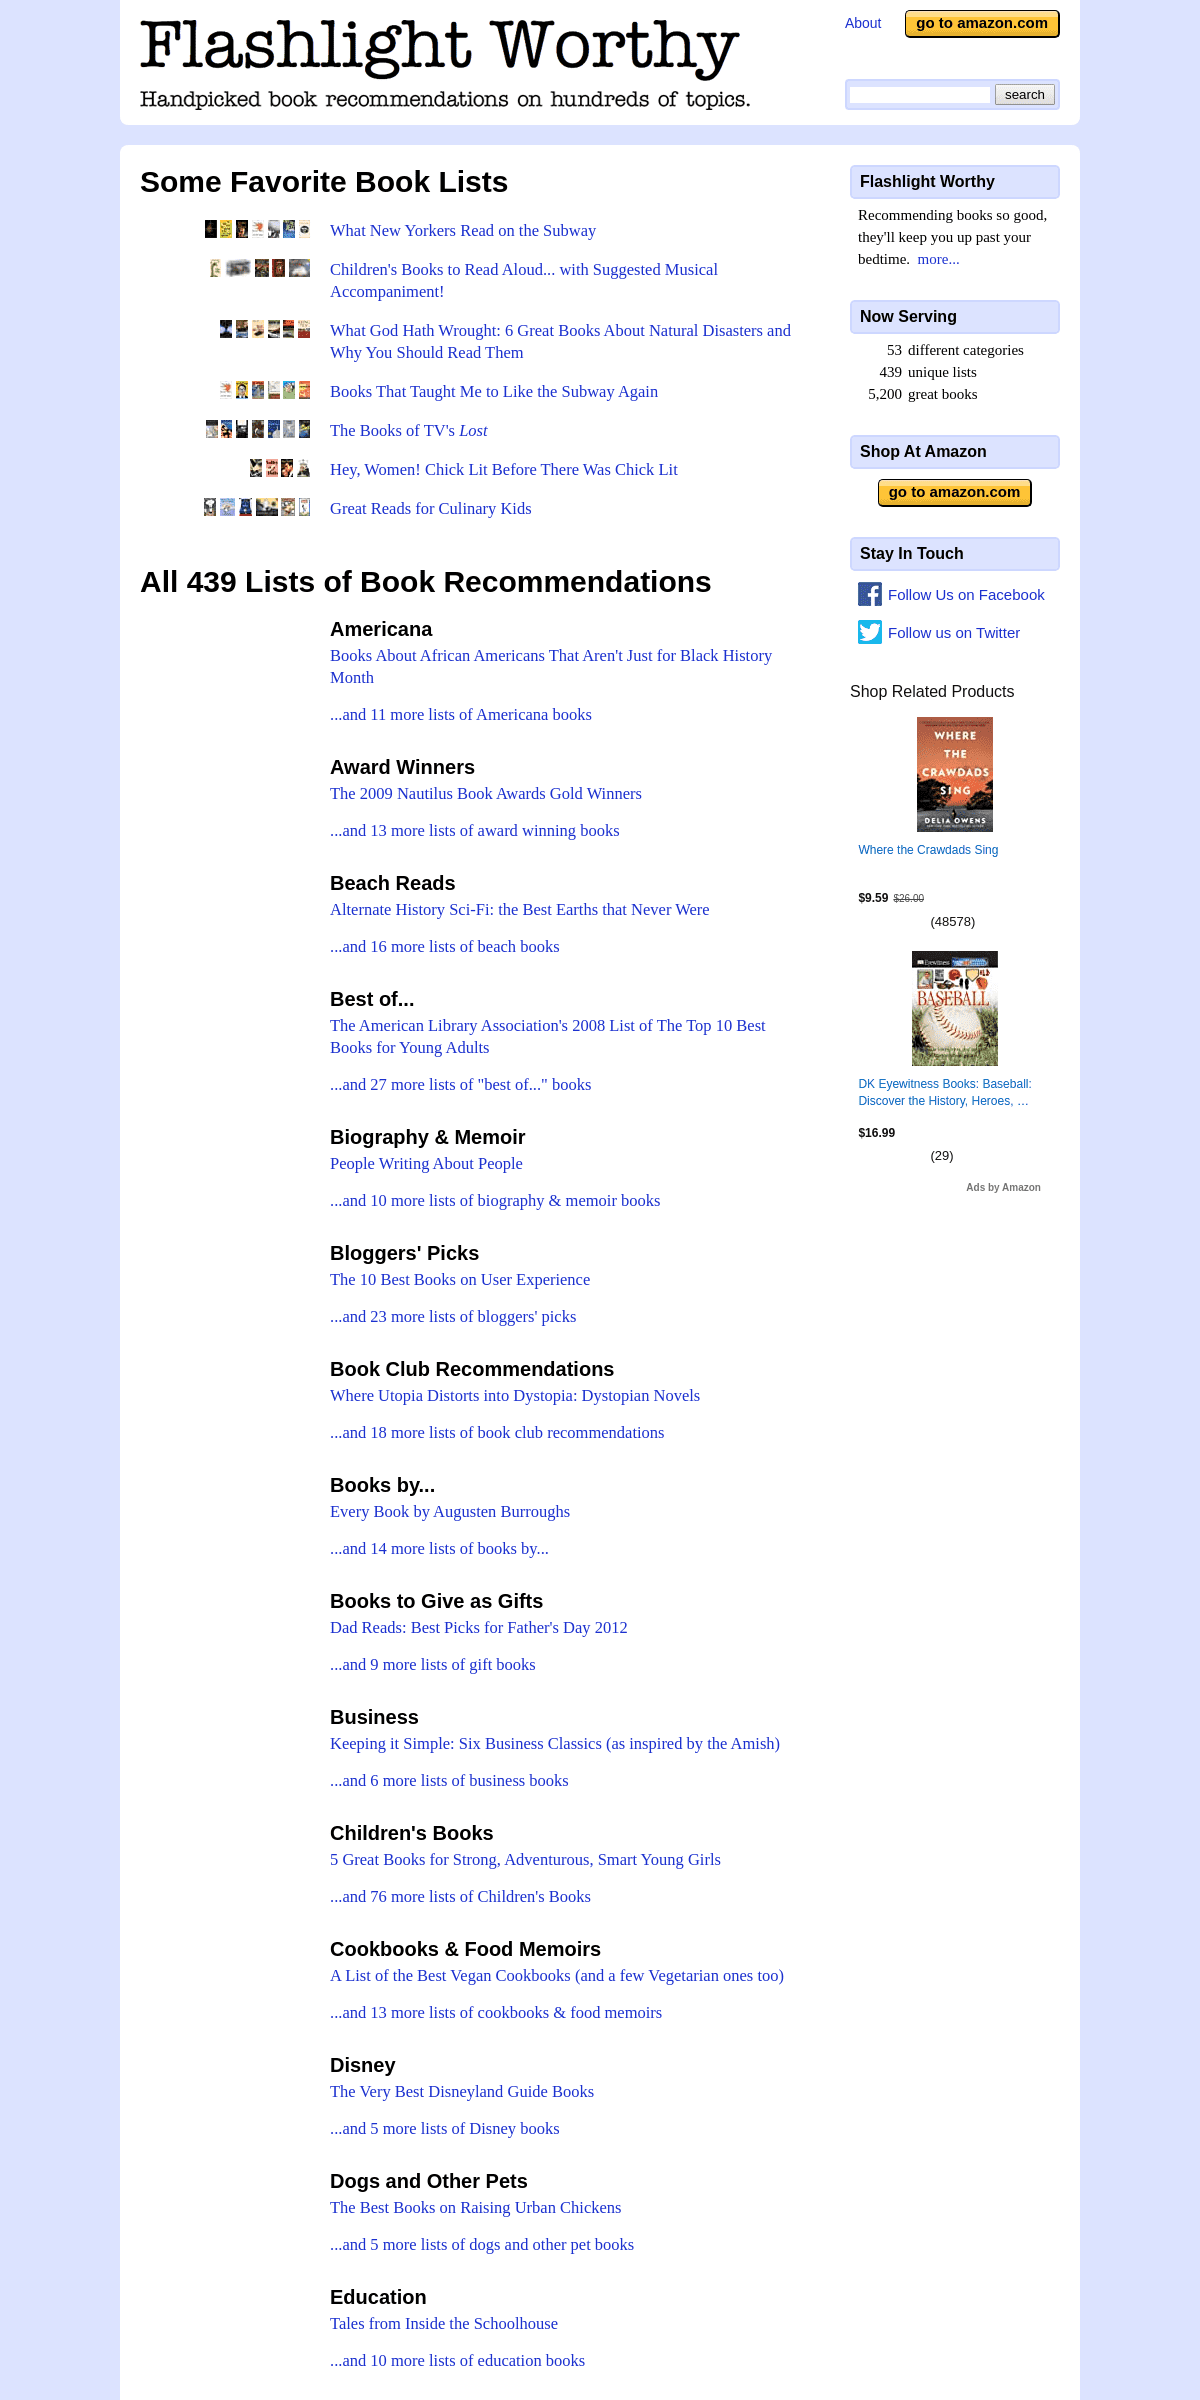 A complete backup of flashlightworthybooks.com